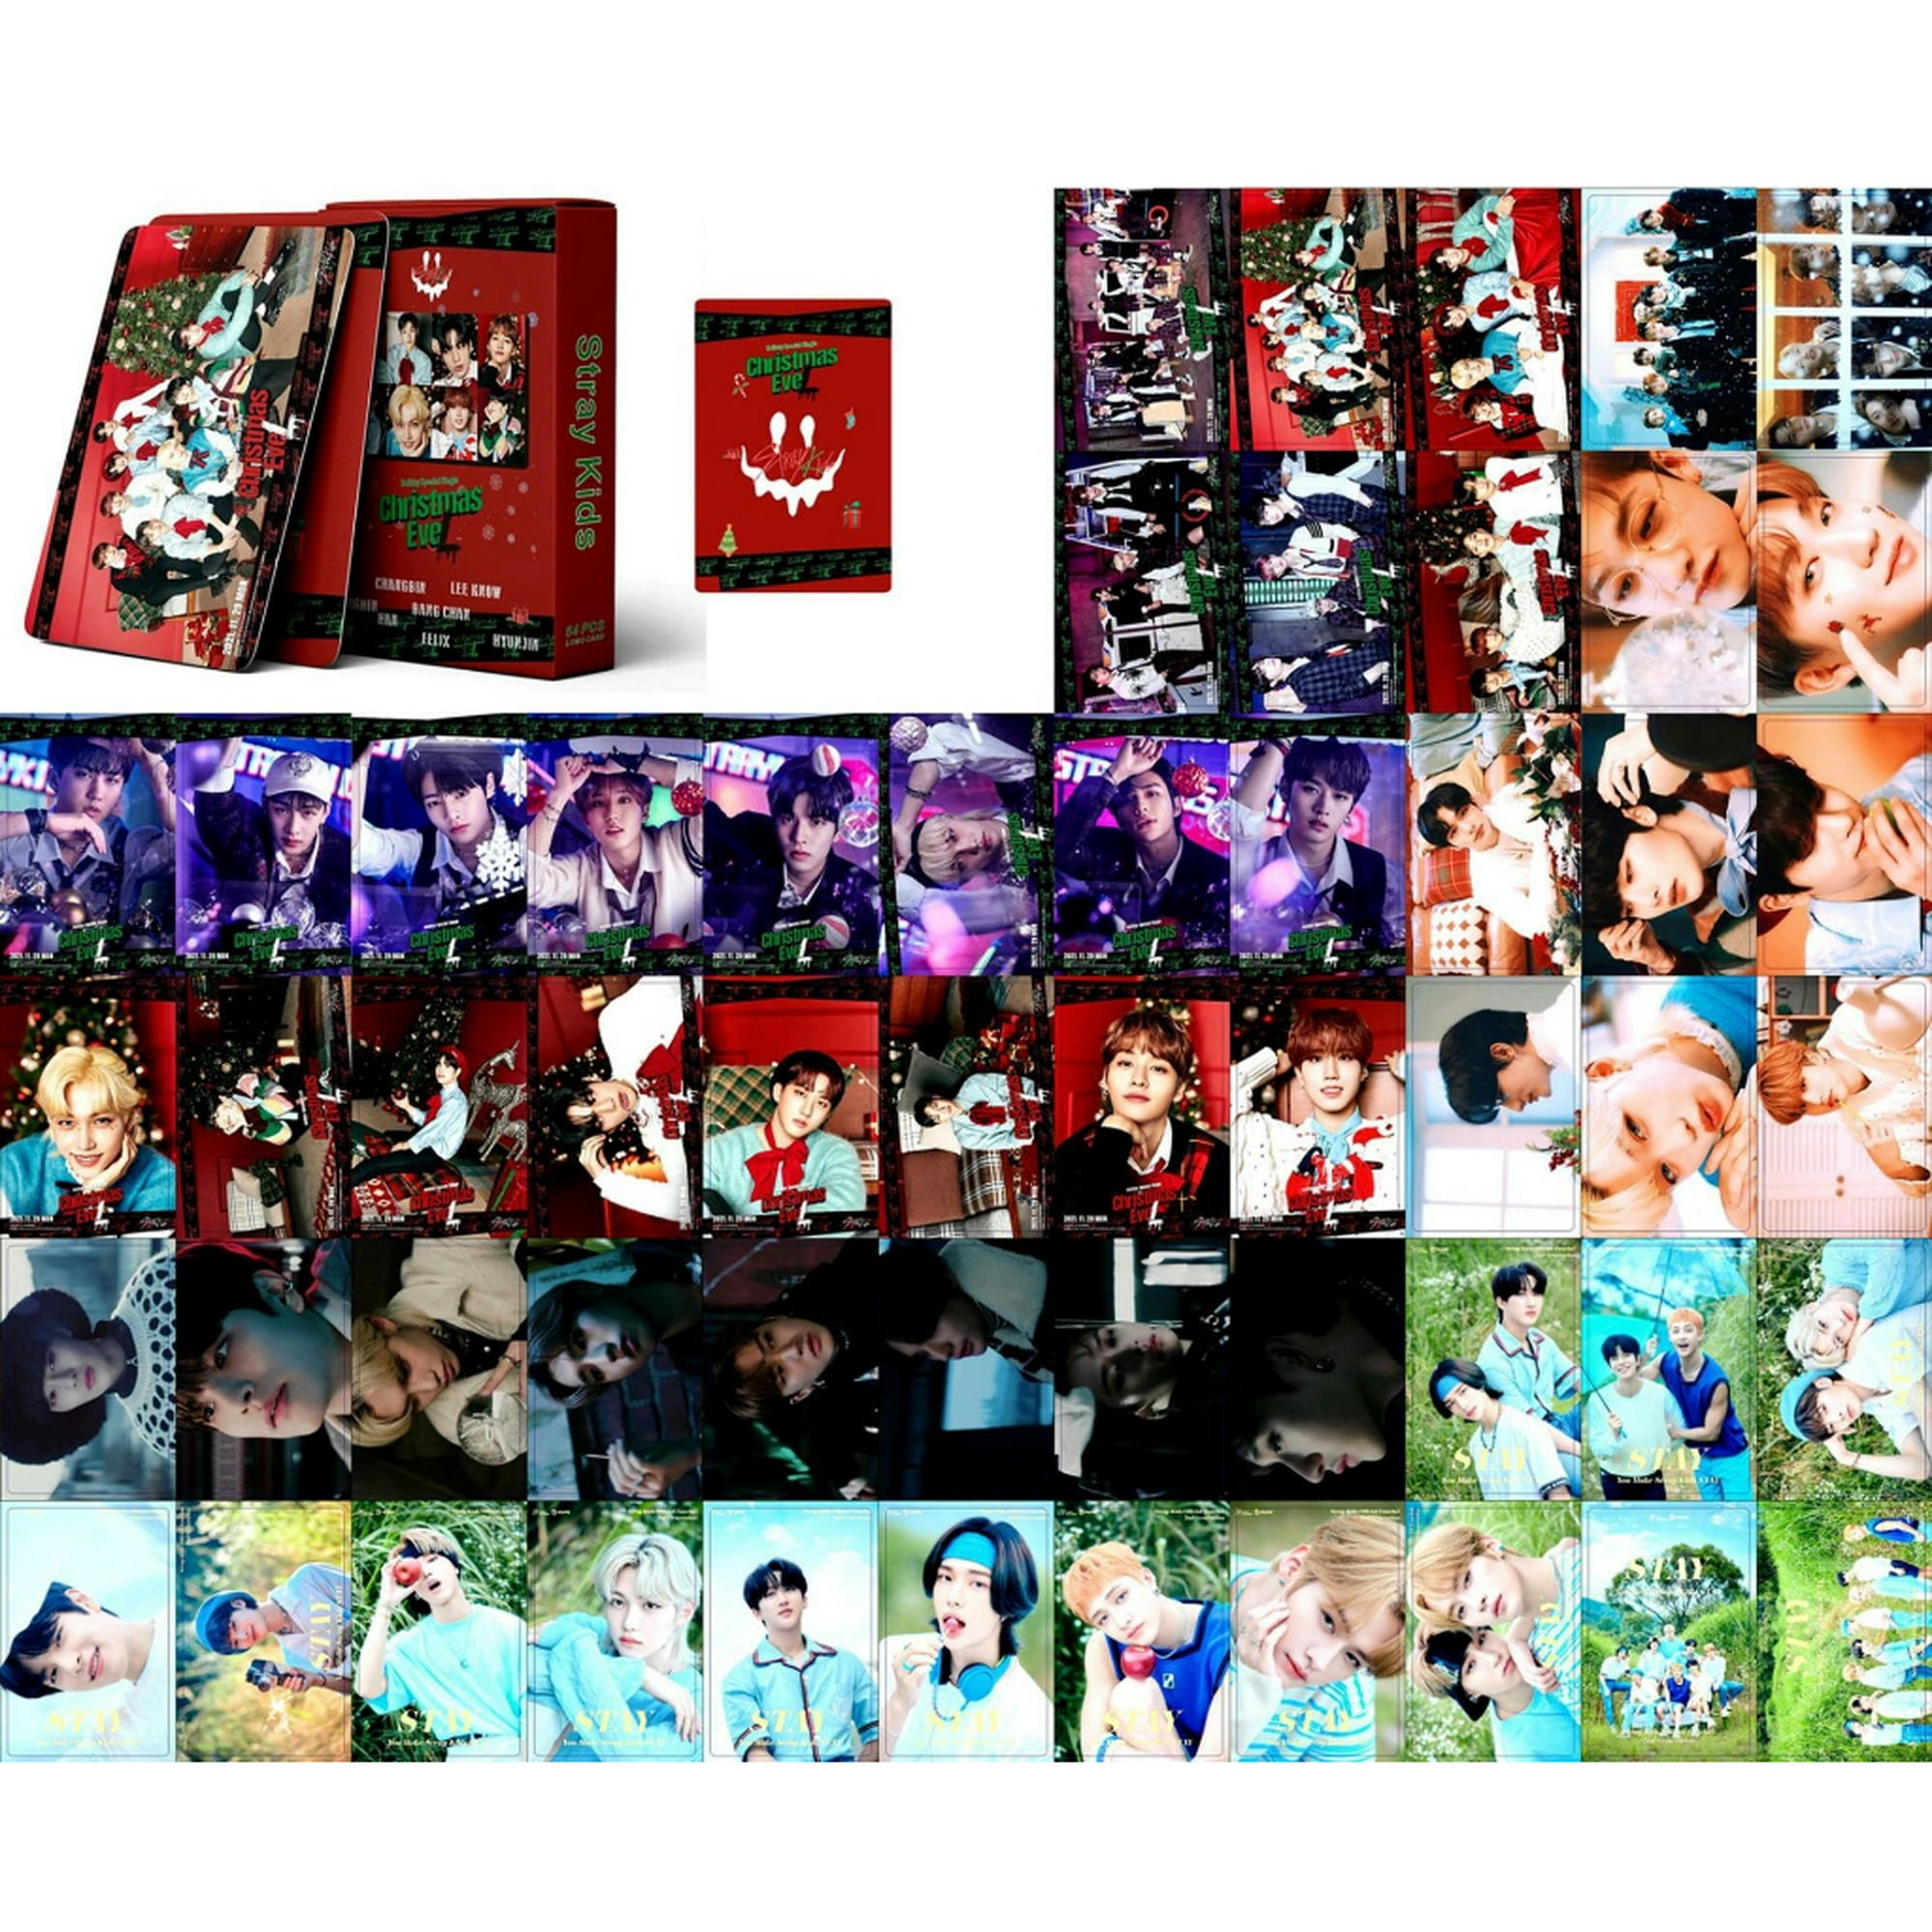 54 Unids/Caja Stray Kids Album Photocards The Sound Not Easy MAXlDENT Lomo  Card Gao Jiahui unisex